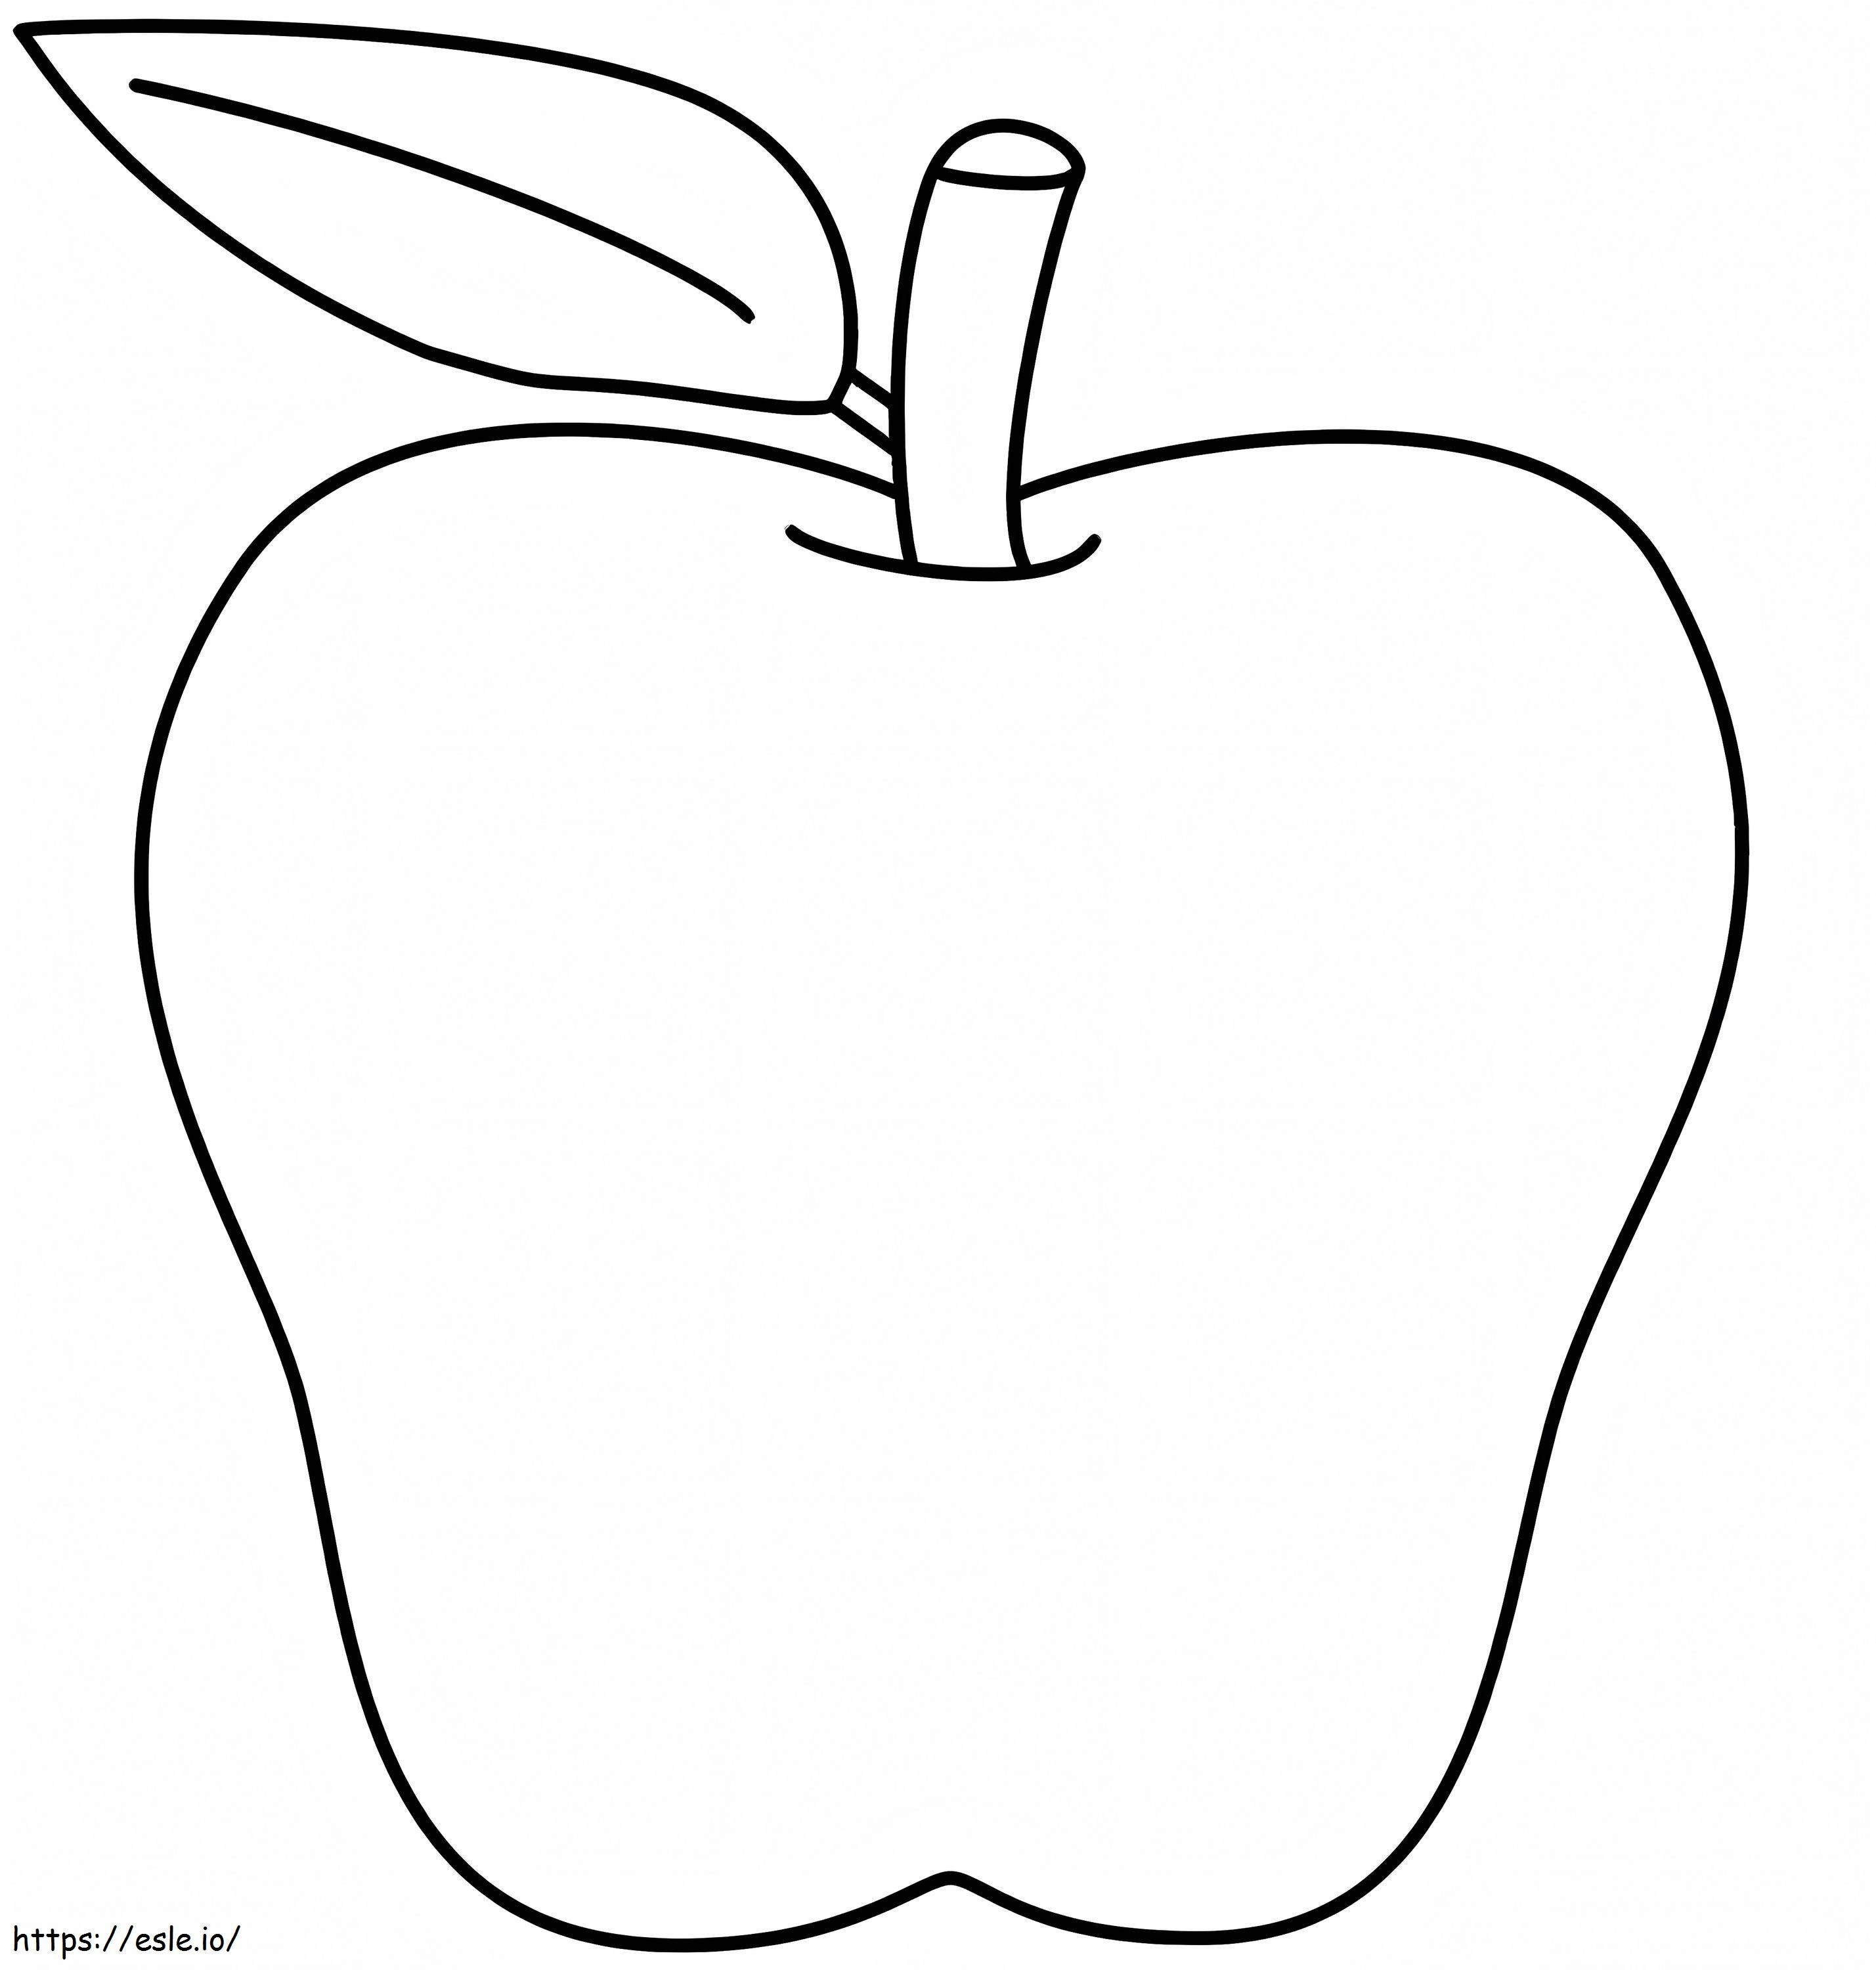 Perfekter Apfel ausmalbilder